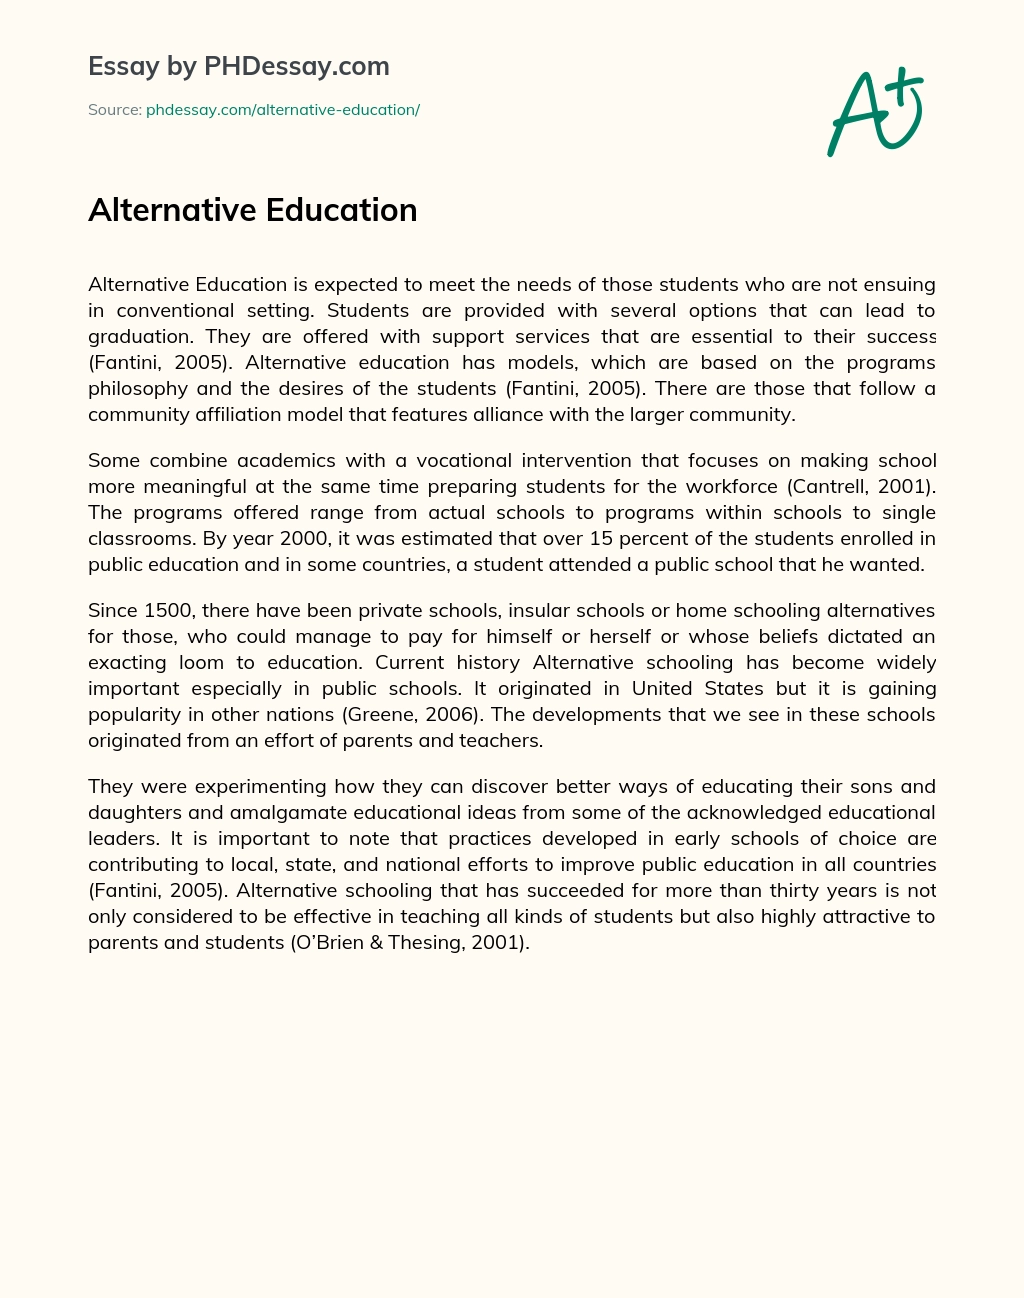 Alternative Education essay